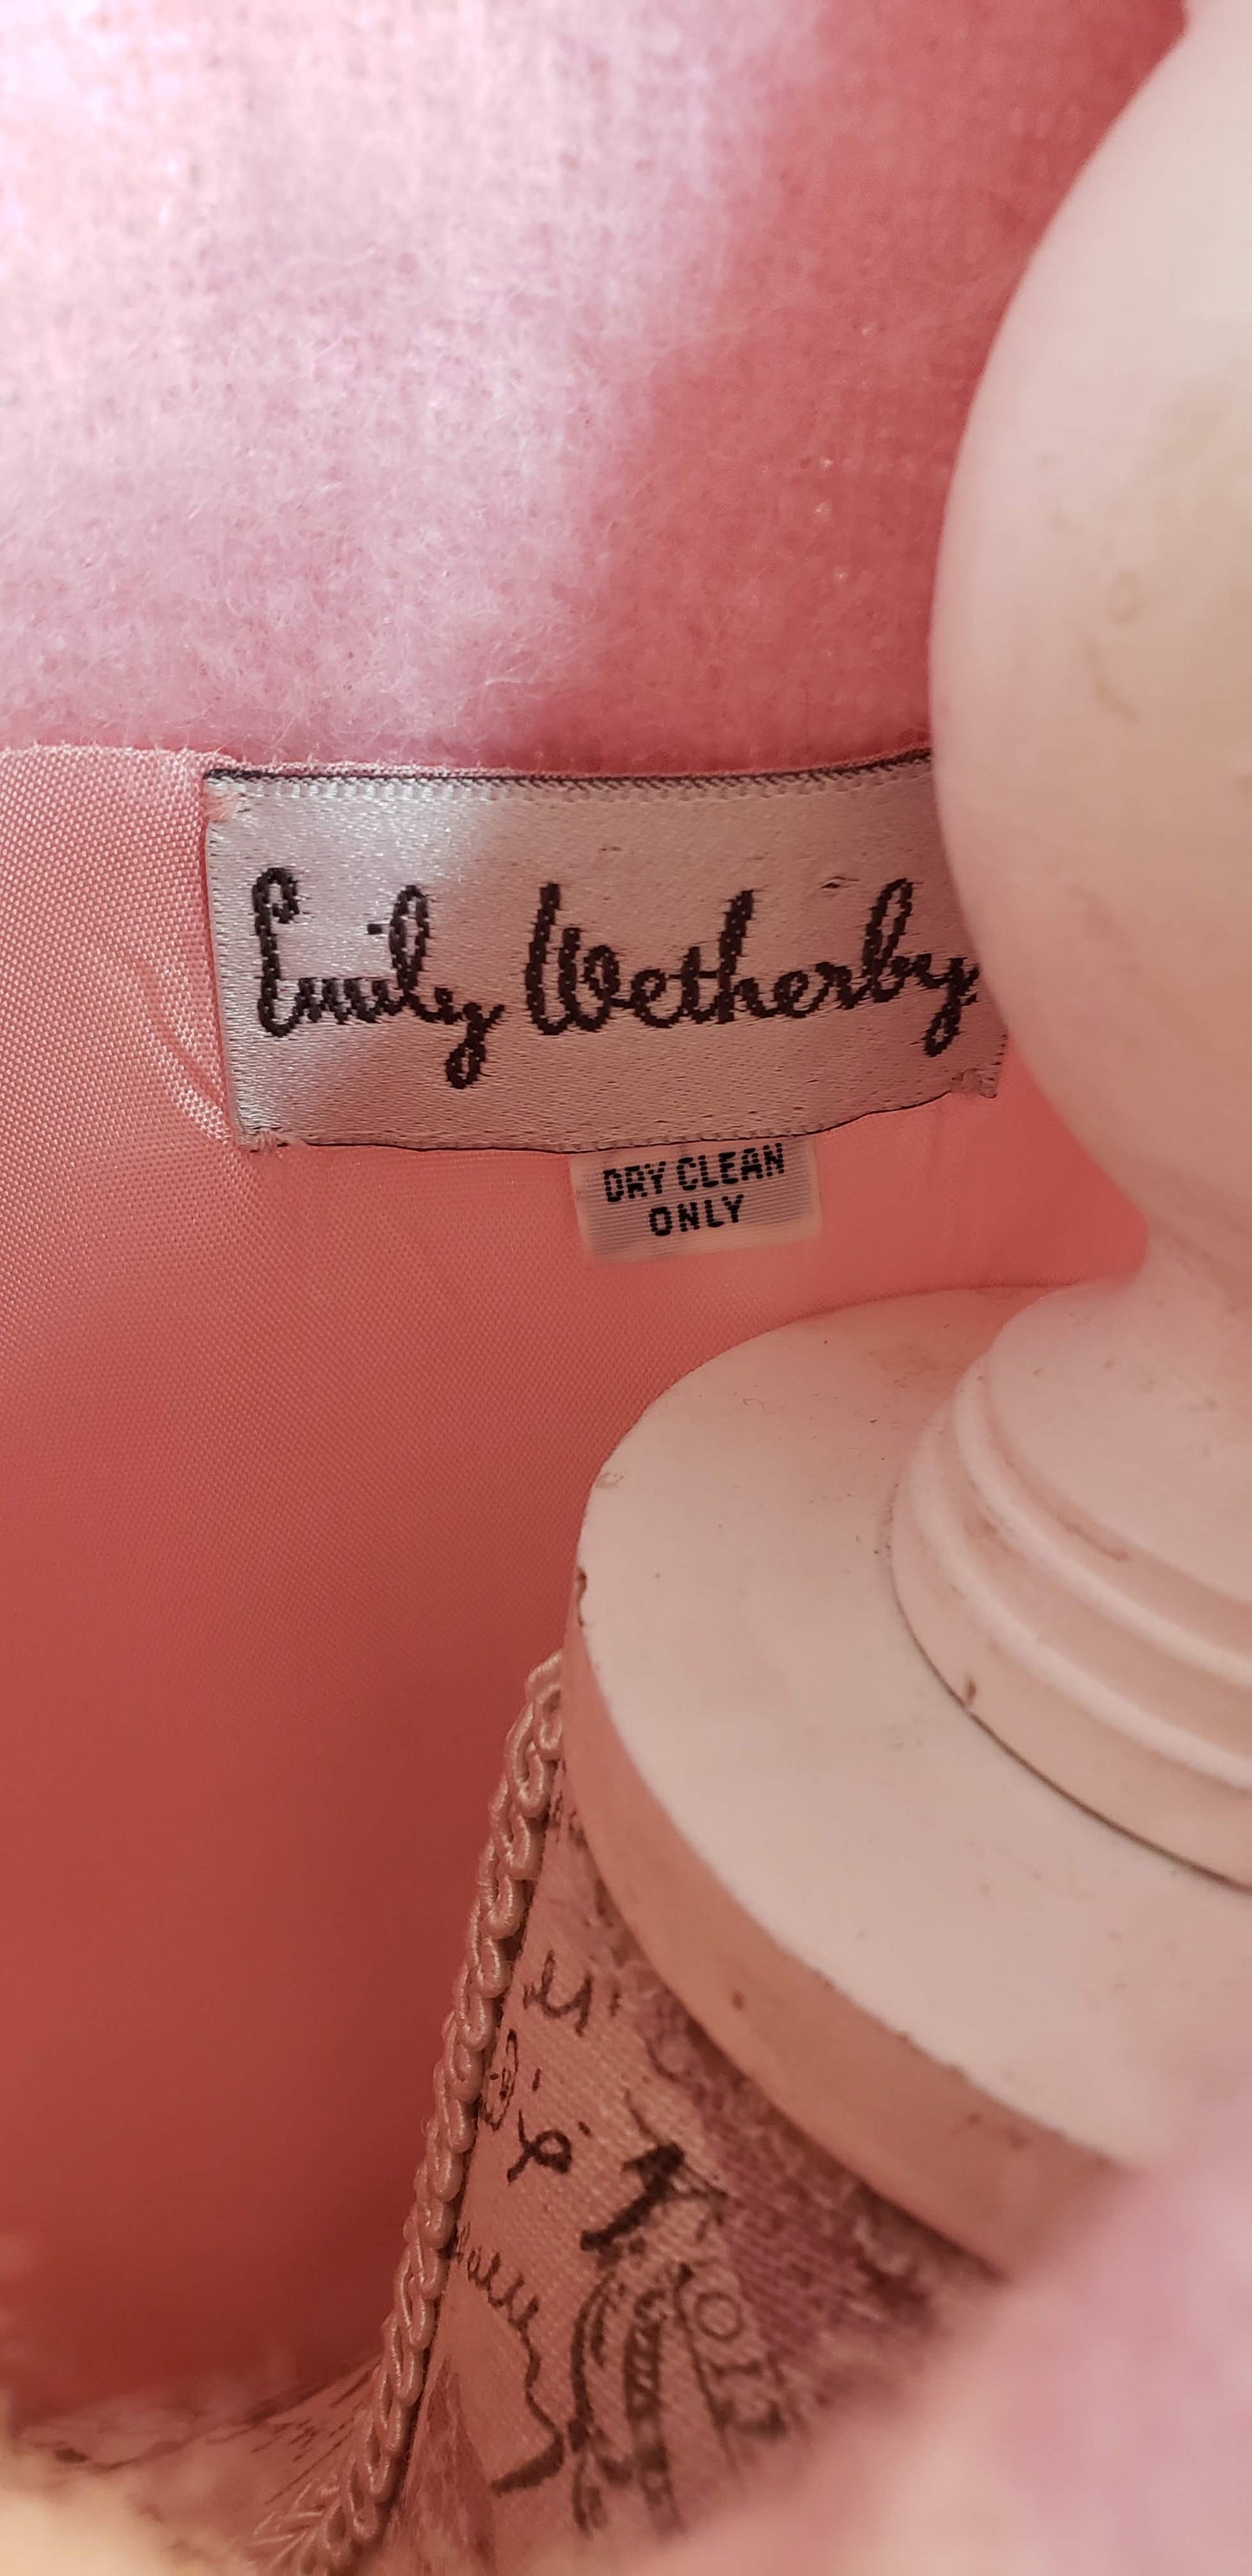 Emily Wetherby Vintage Pink Coat Sz M/L